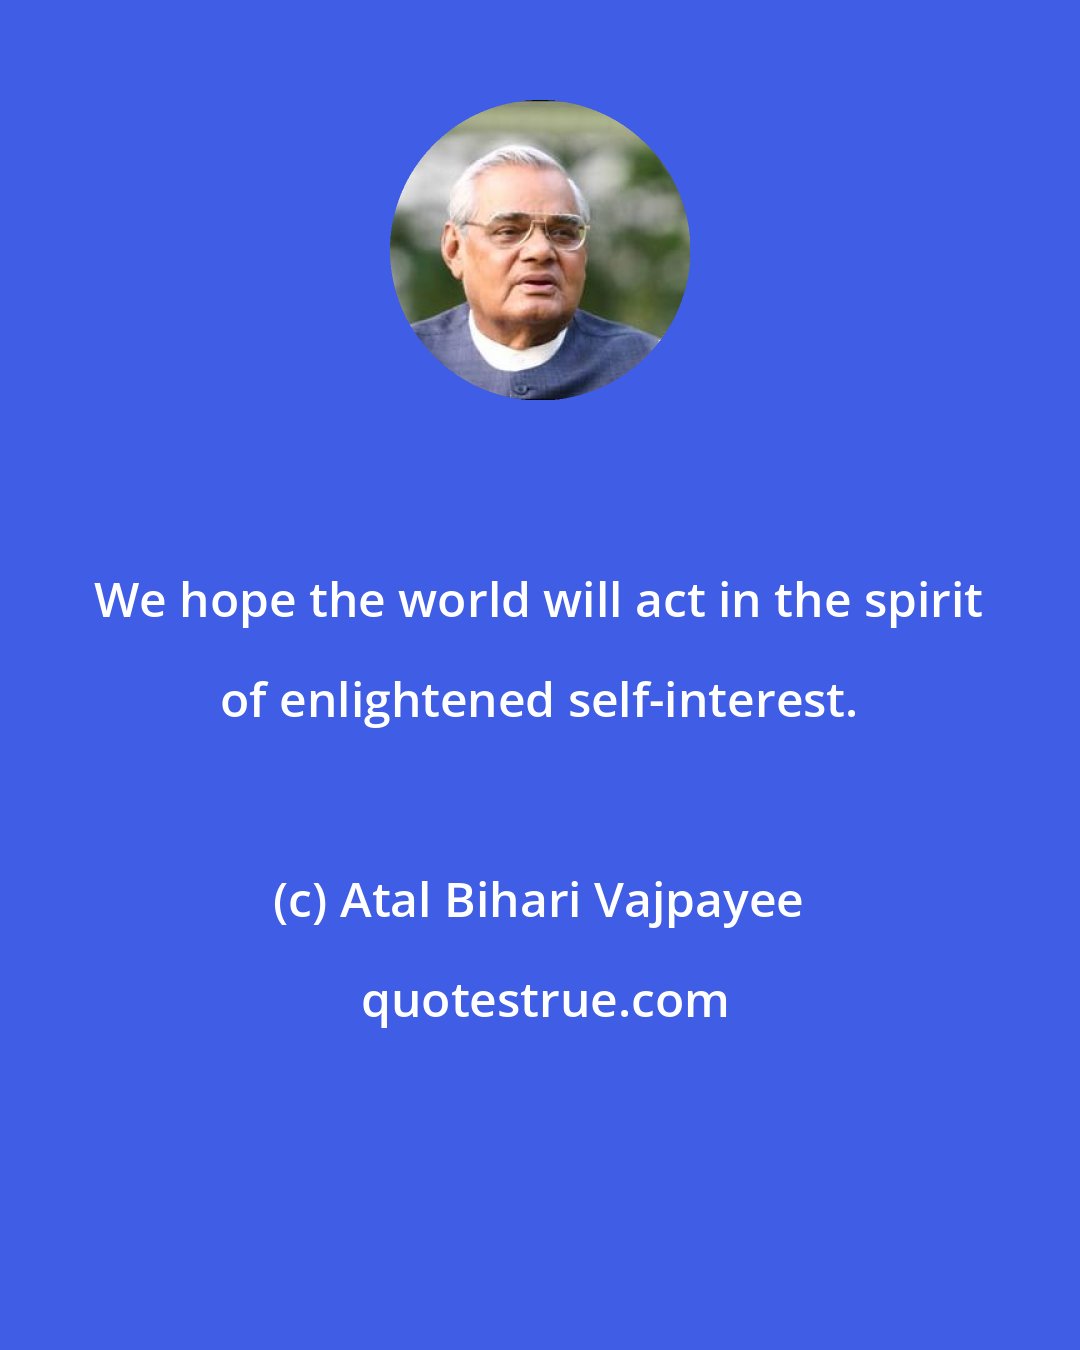 Atal Bihari Vajpayee: We hope the world will act in the spirit of enlightened self-interest.